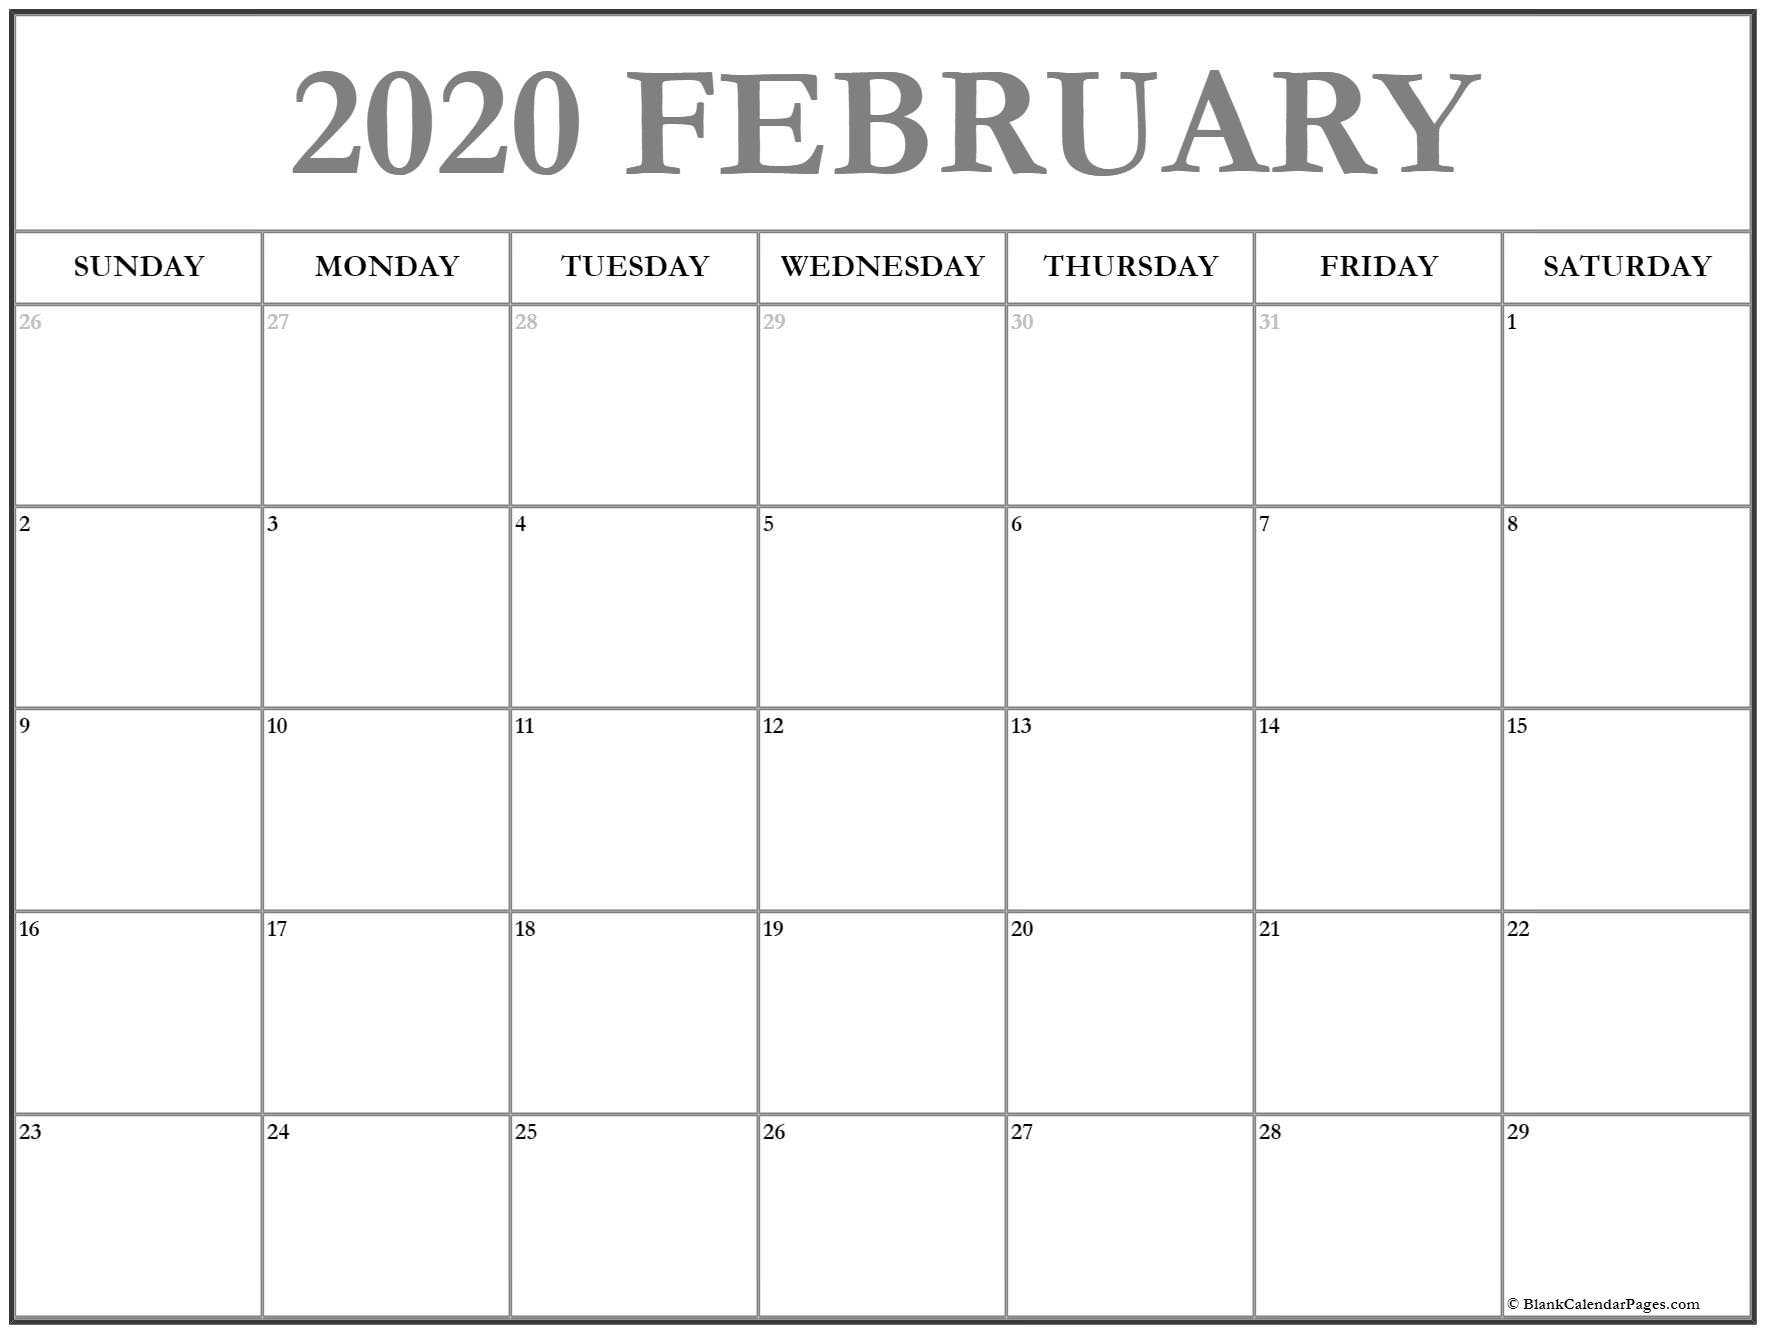 February 2020 Calendar | Free Printable Monthly Calendars